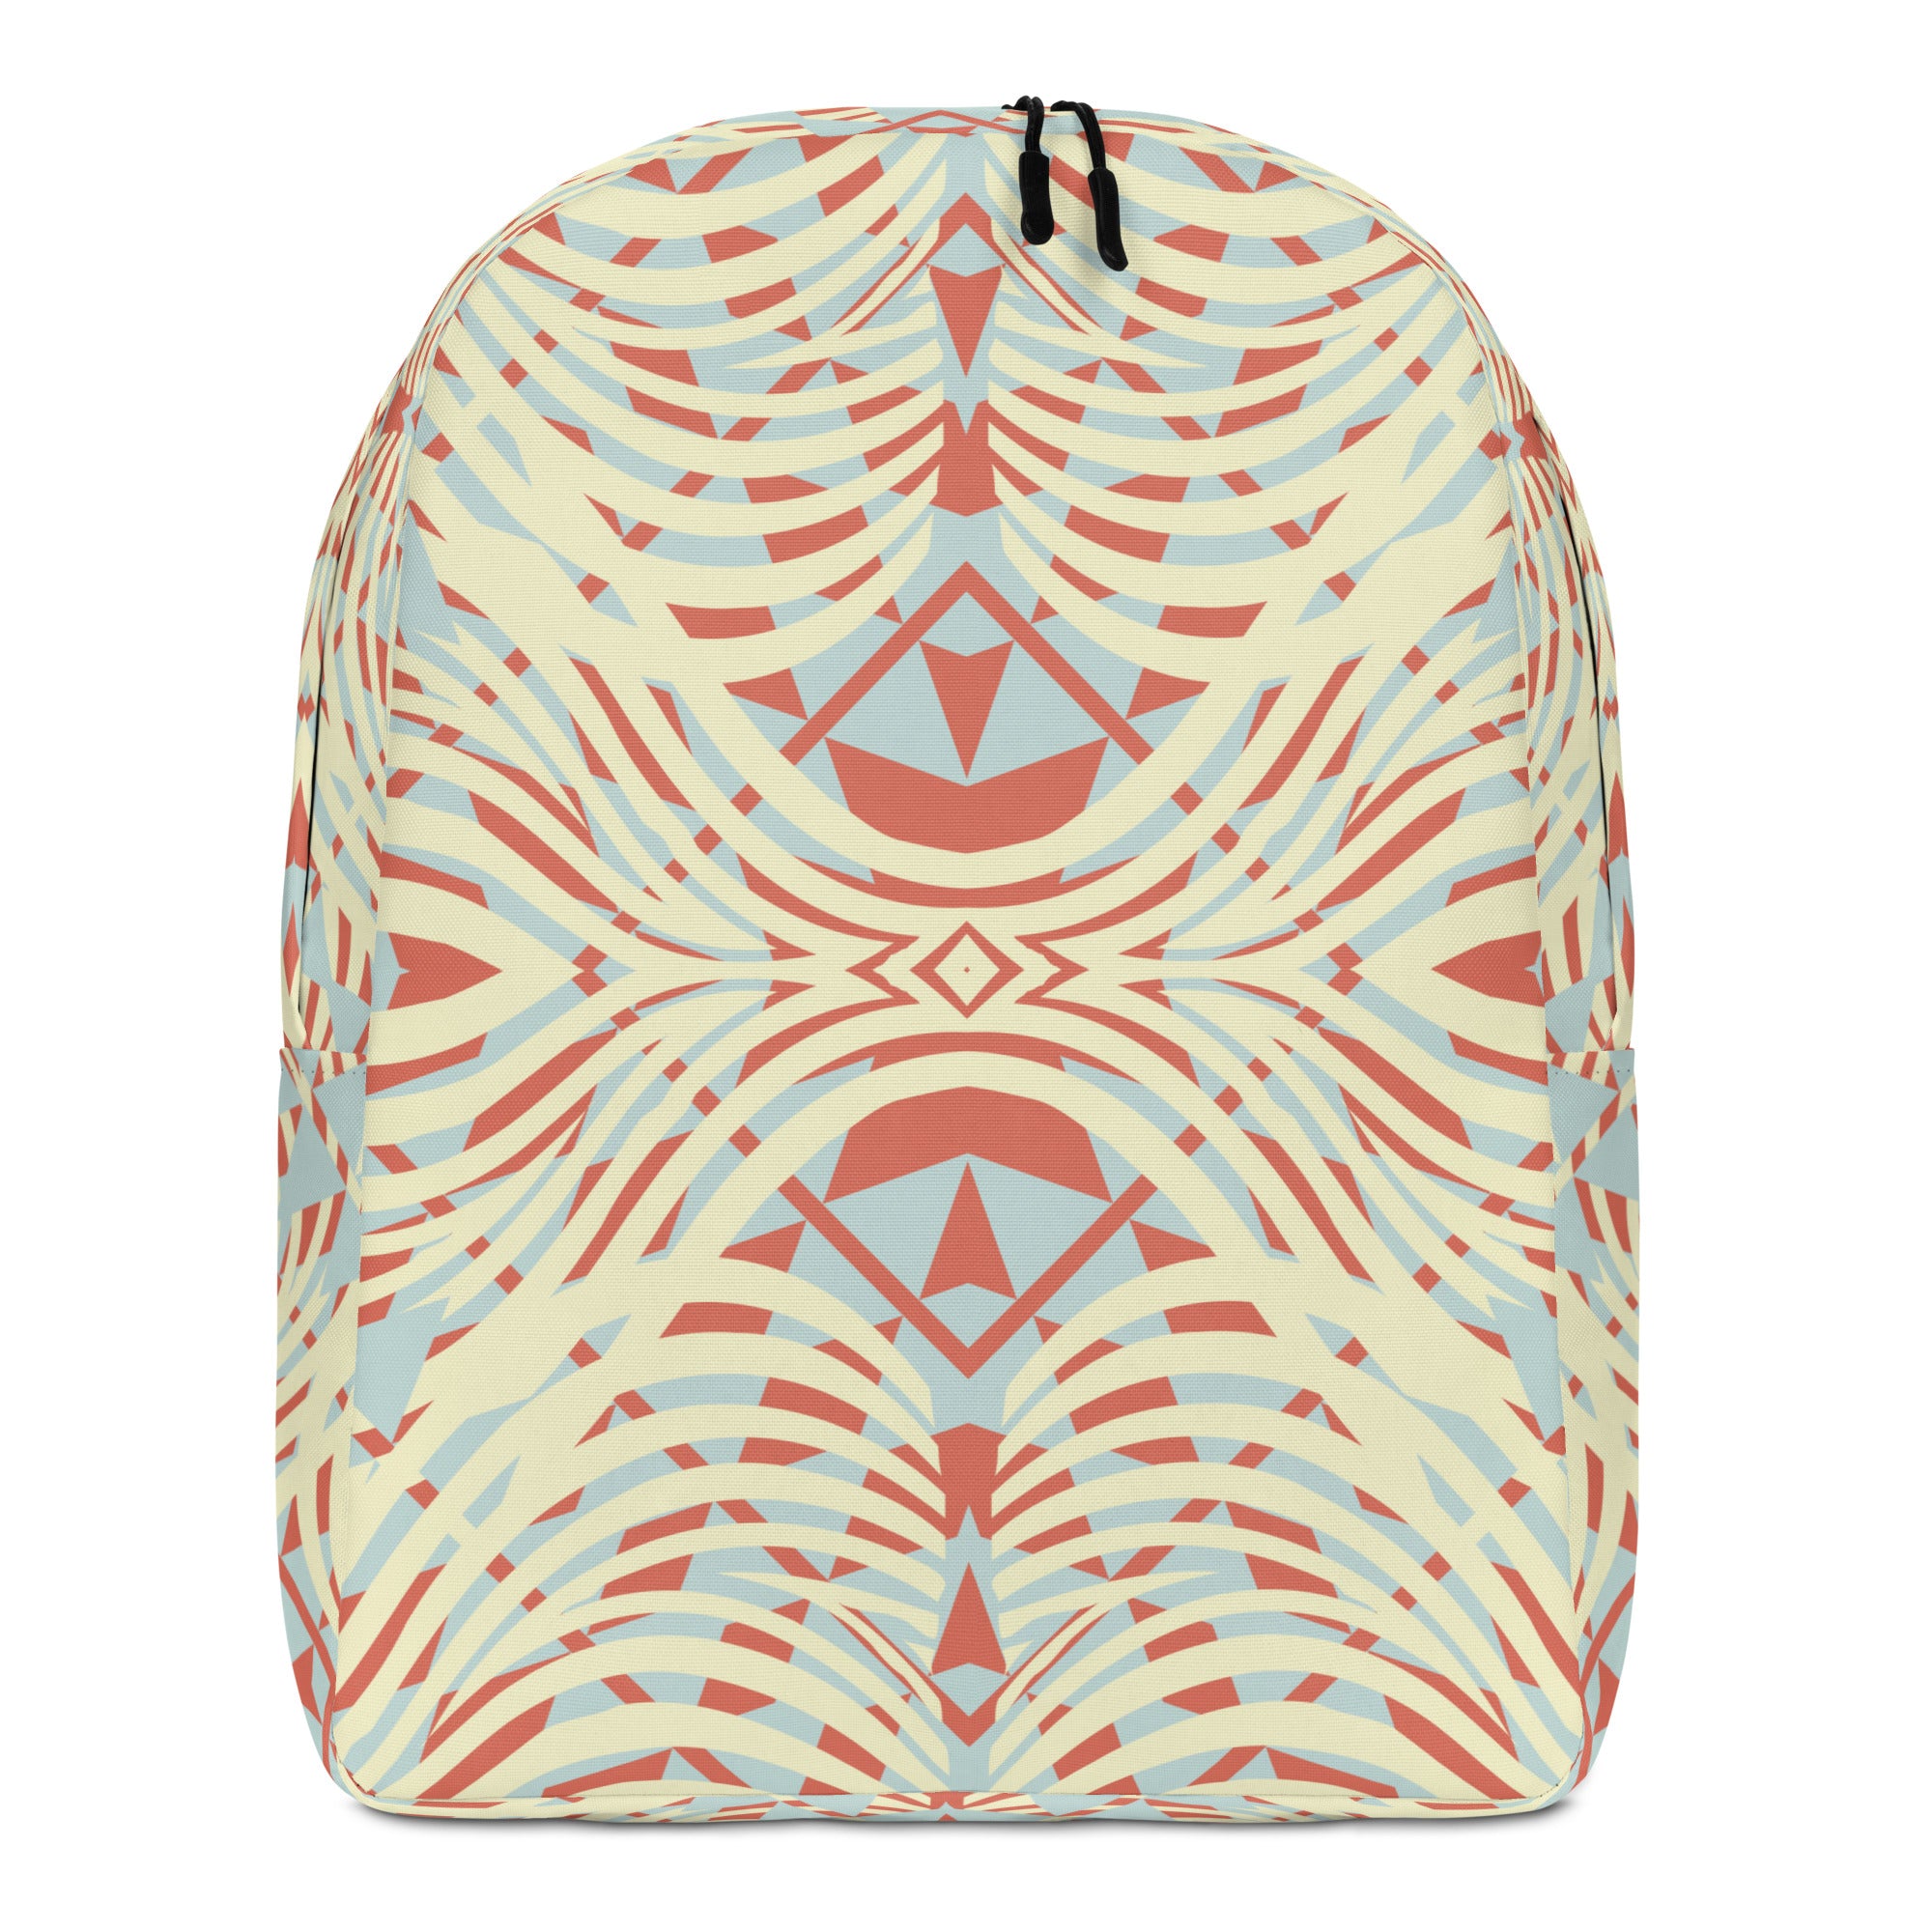 Minimalist Backpack- African Motif Pattern III